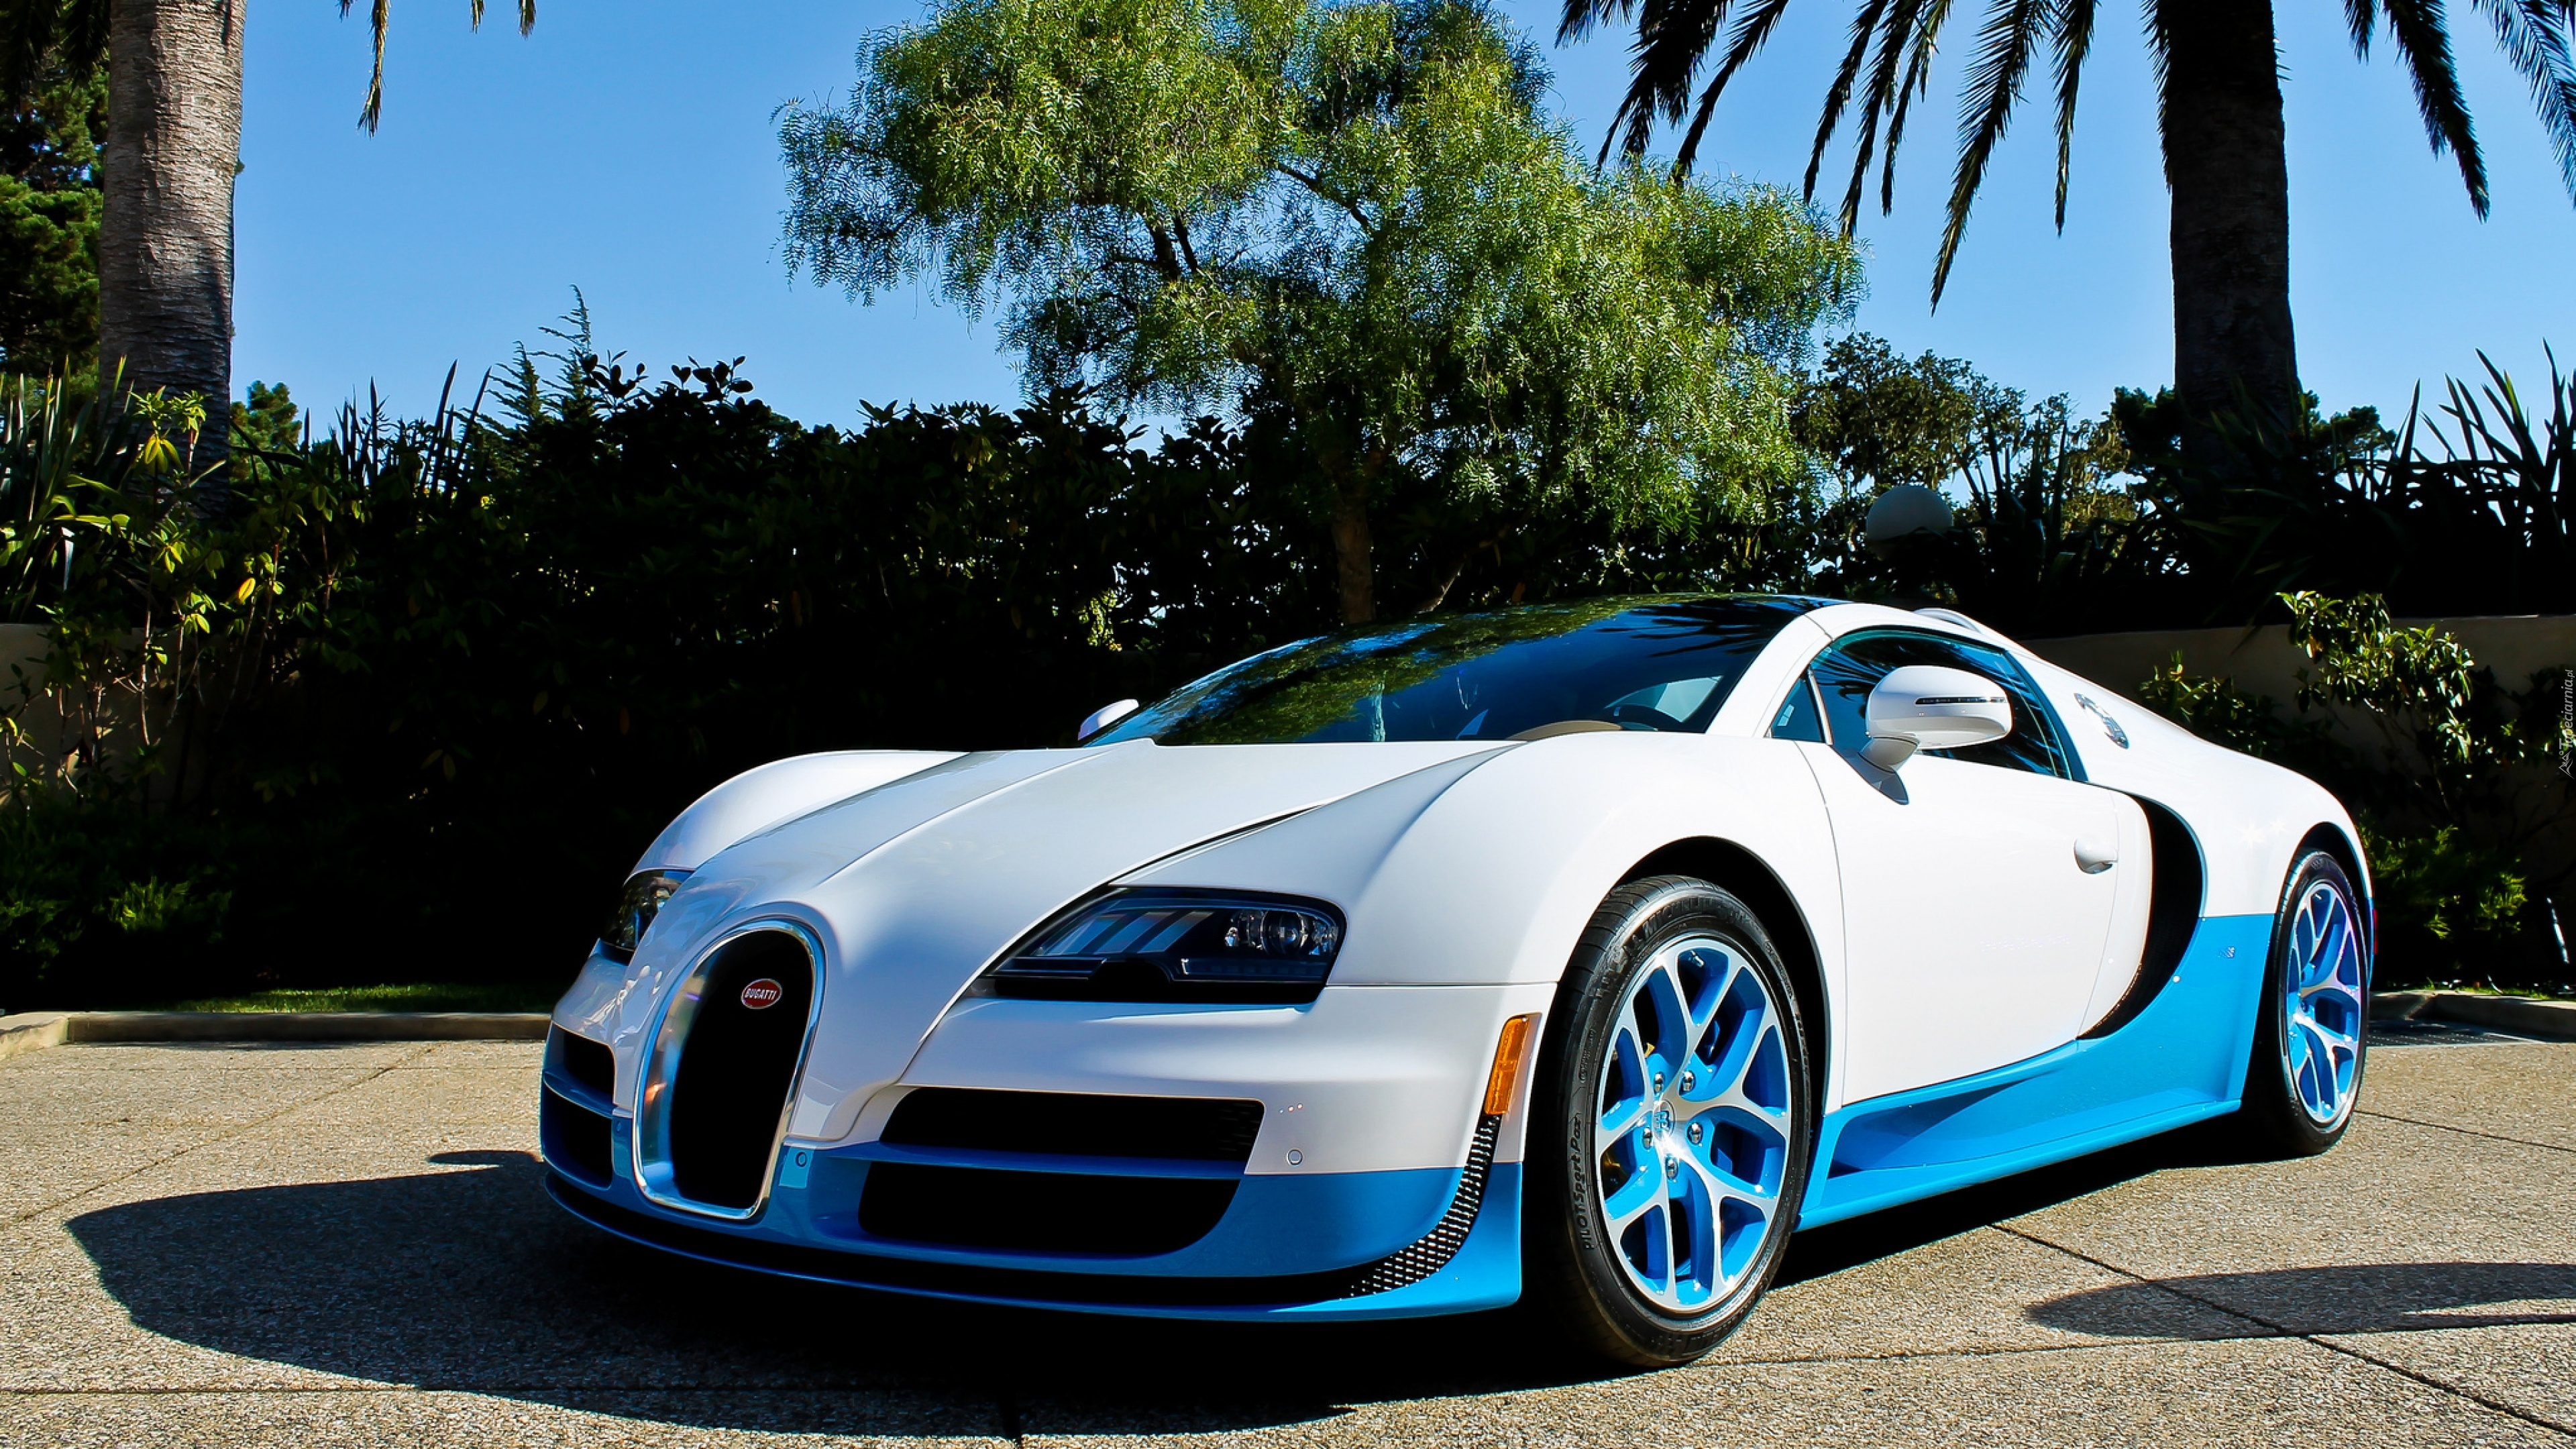 Bugatti Veyron, Palmy